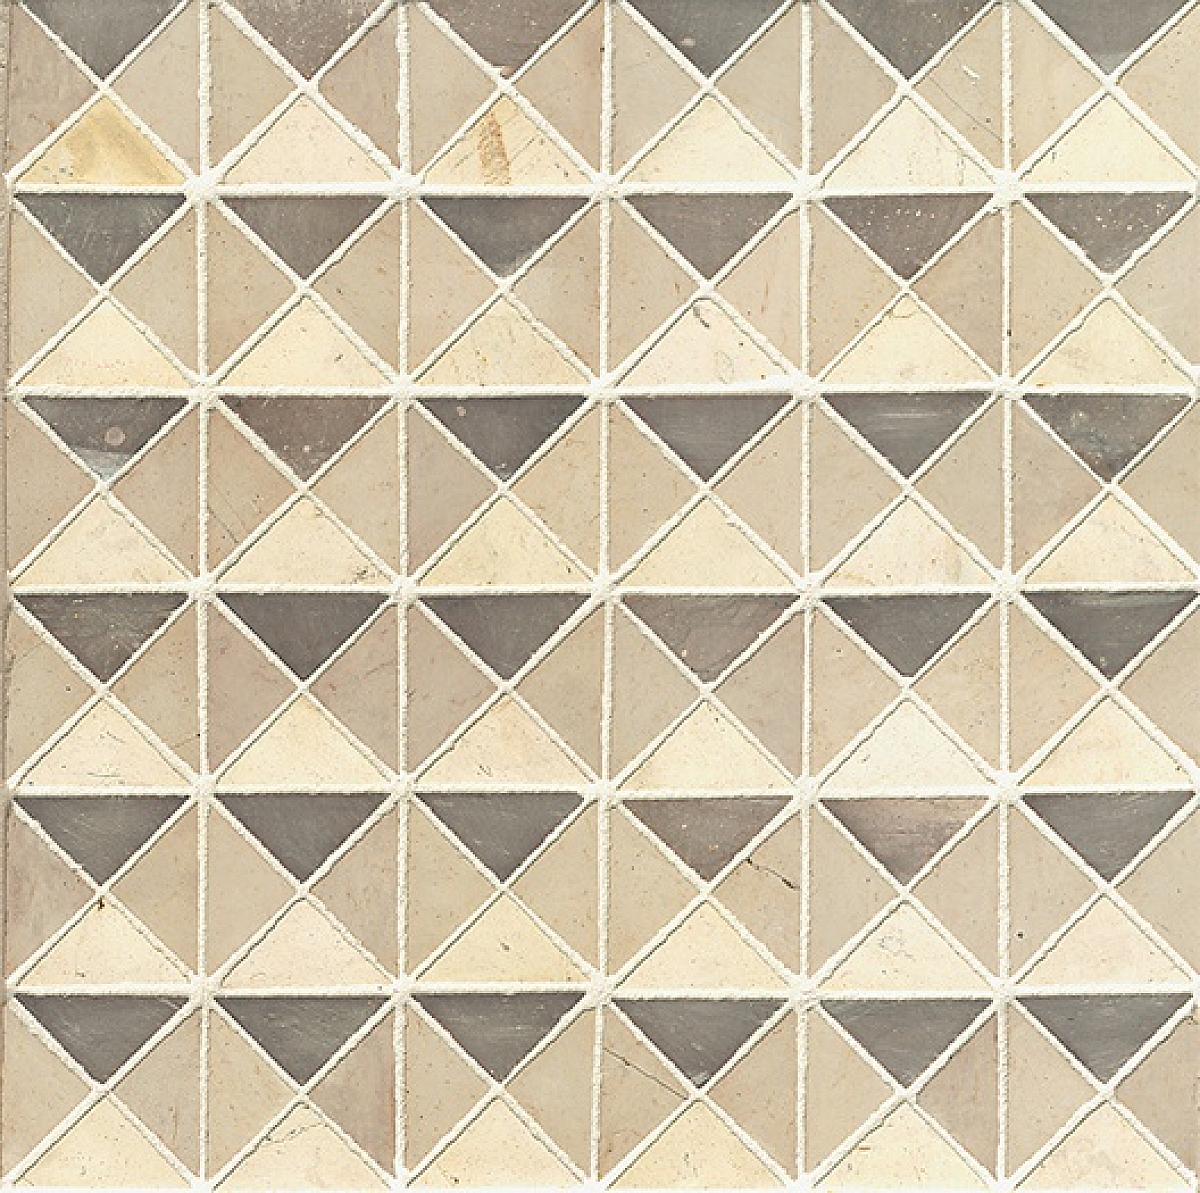 Cape Town Bo-Kaap Blocks Mosaic Tile